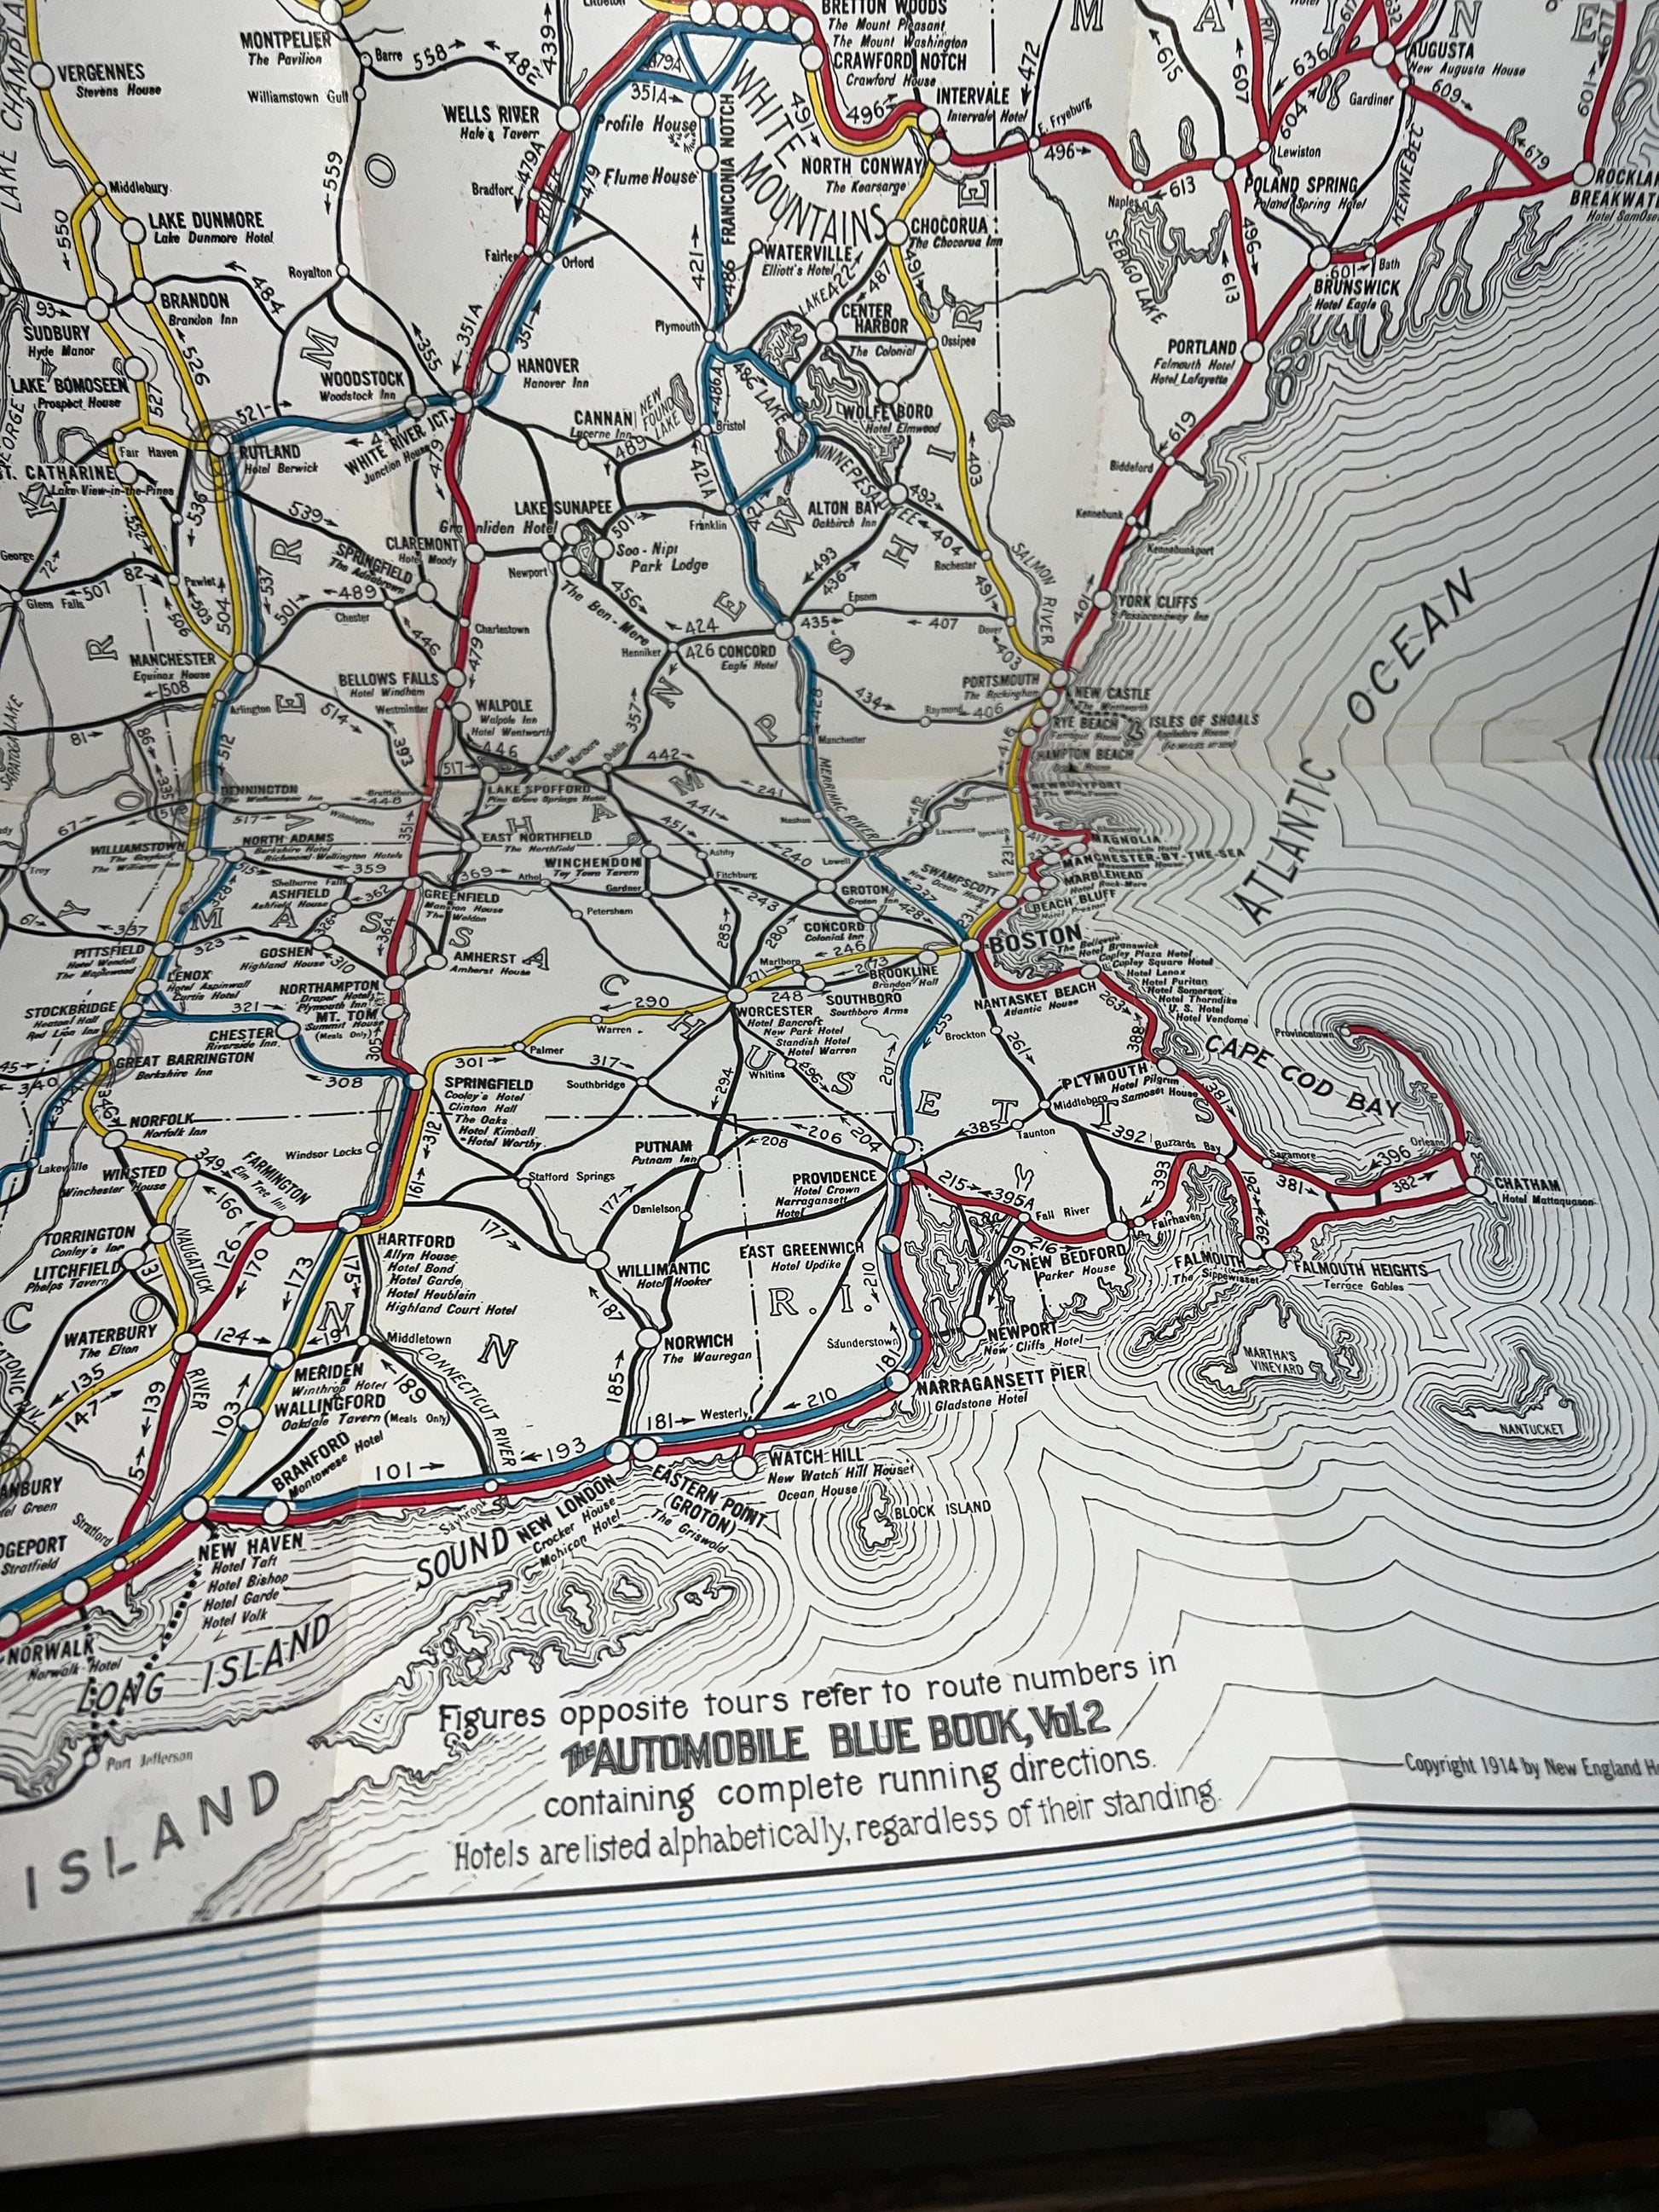 Antique road map tourist Art deco era 1914 New England tours